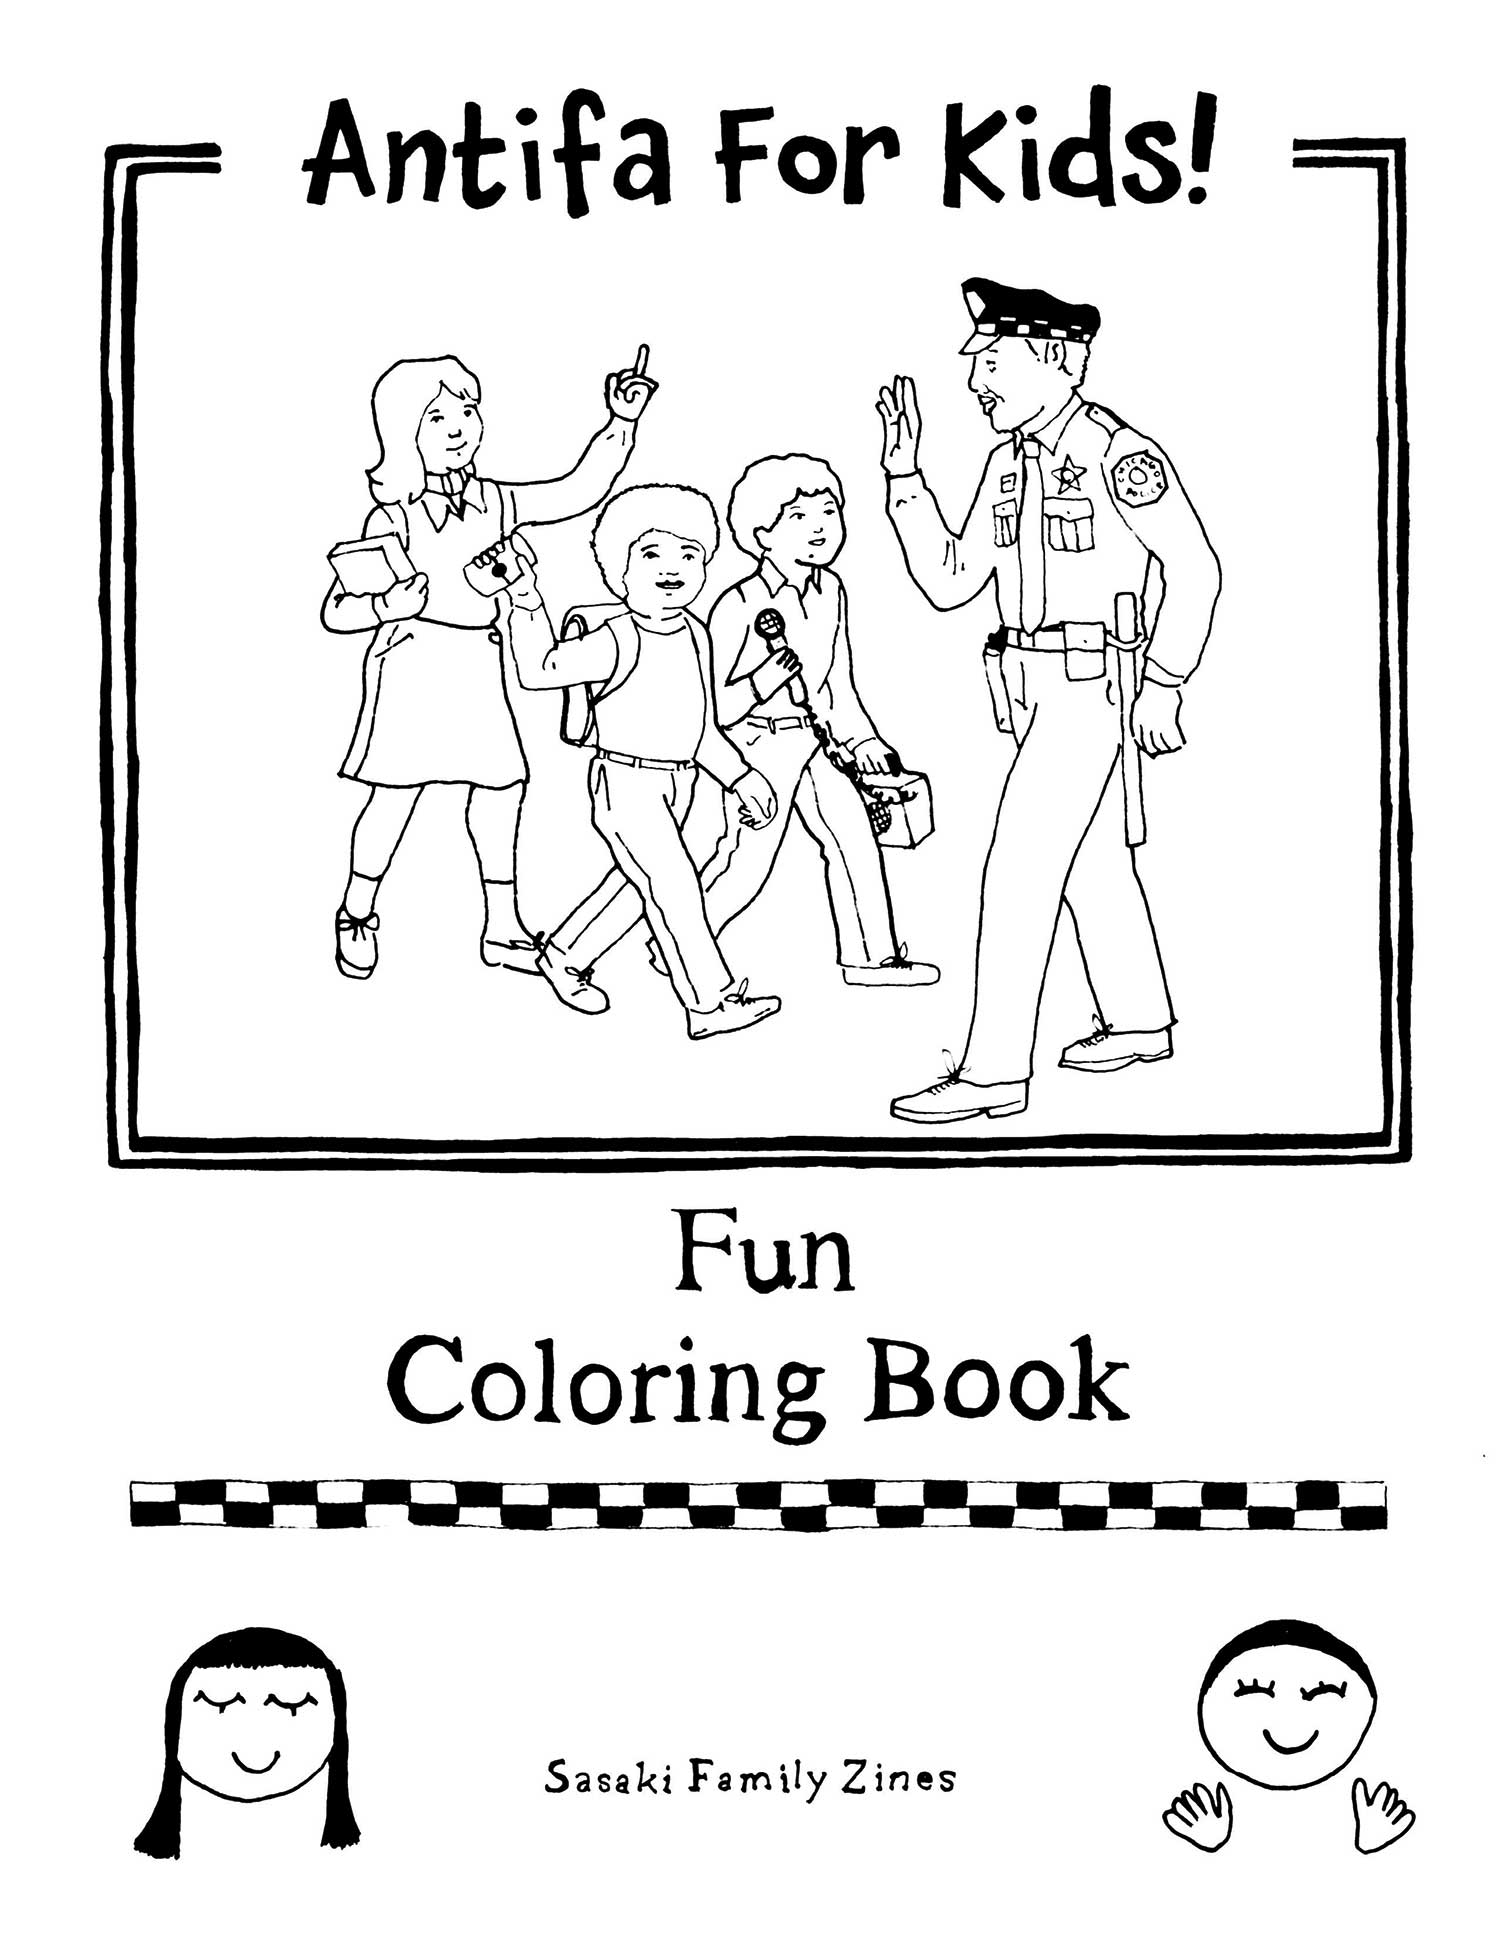 Justseeds  Antifa For Kids! (Fun Coloring Book)